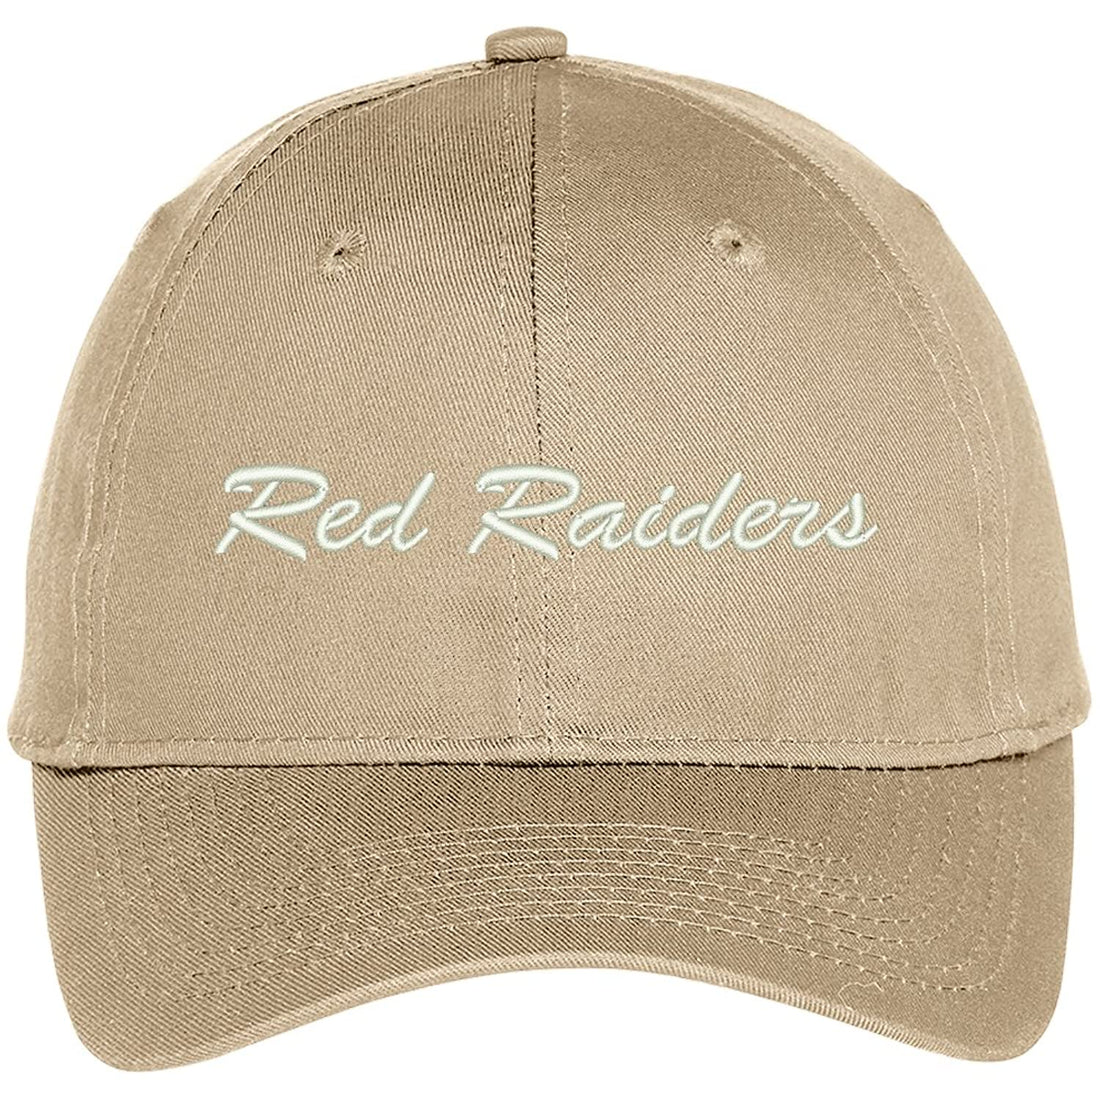 Trendy Apparel Shop Red Raiders Embroidered Team Nickname Mascot Cap - Khaki